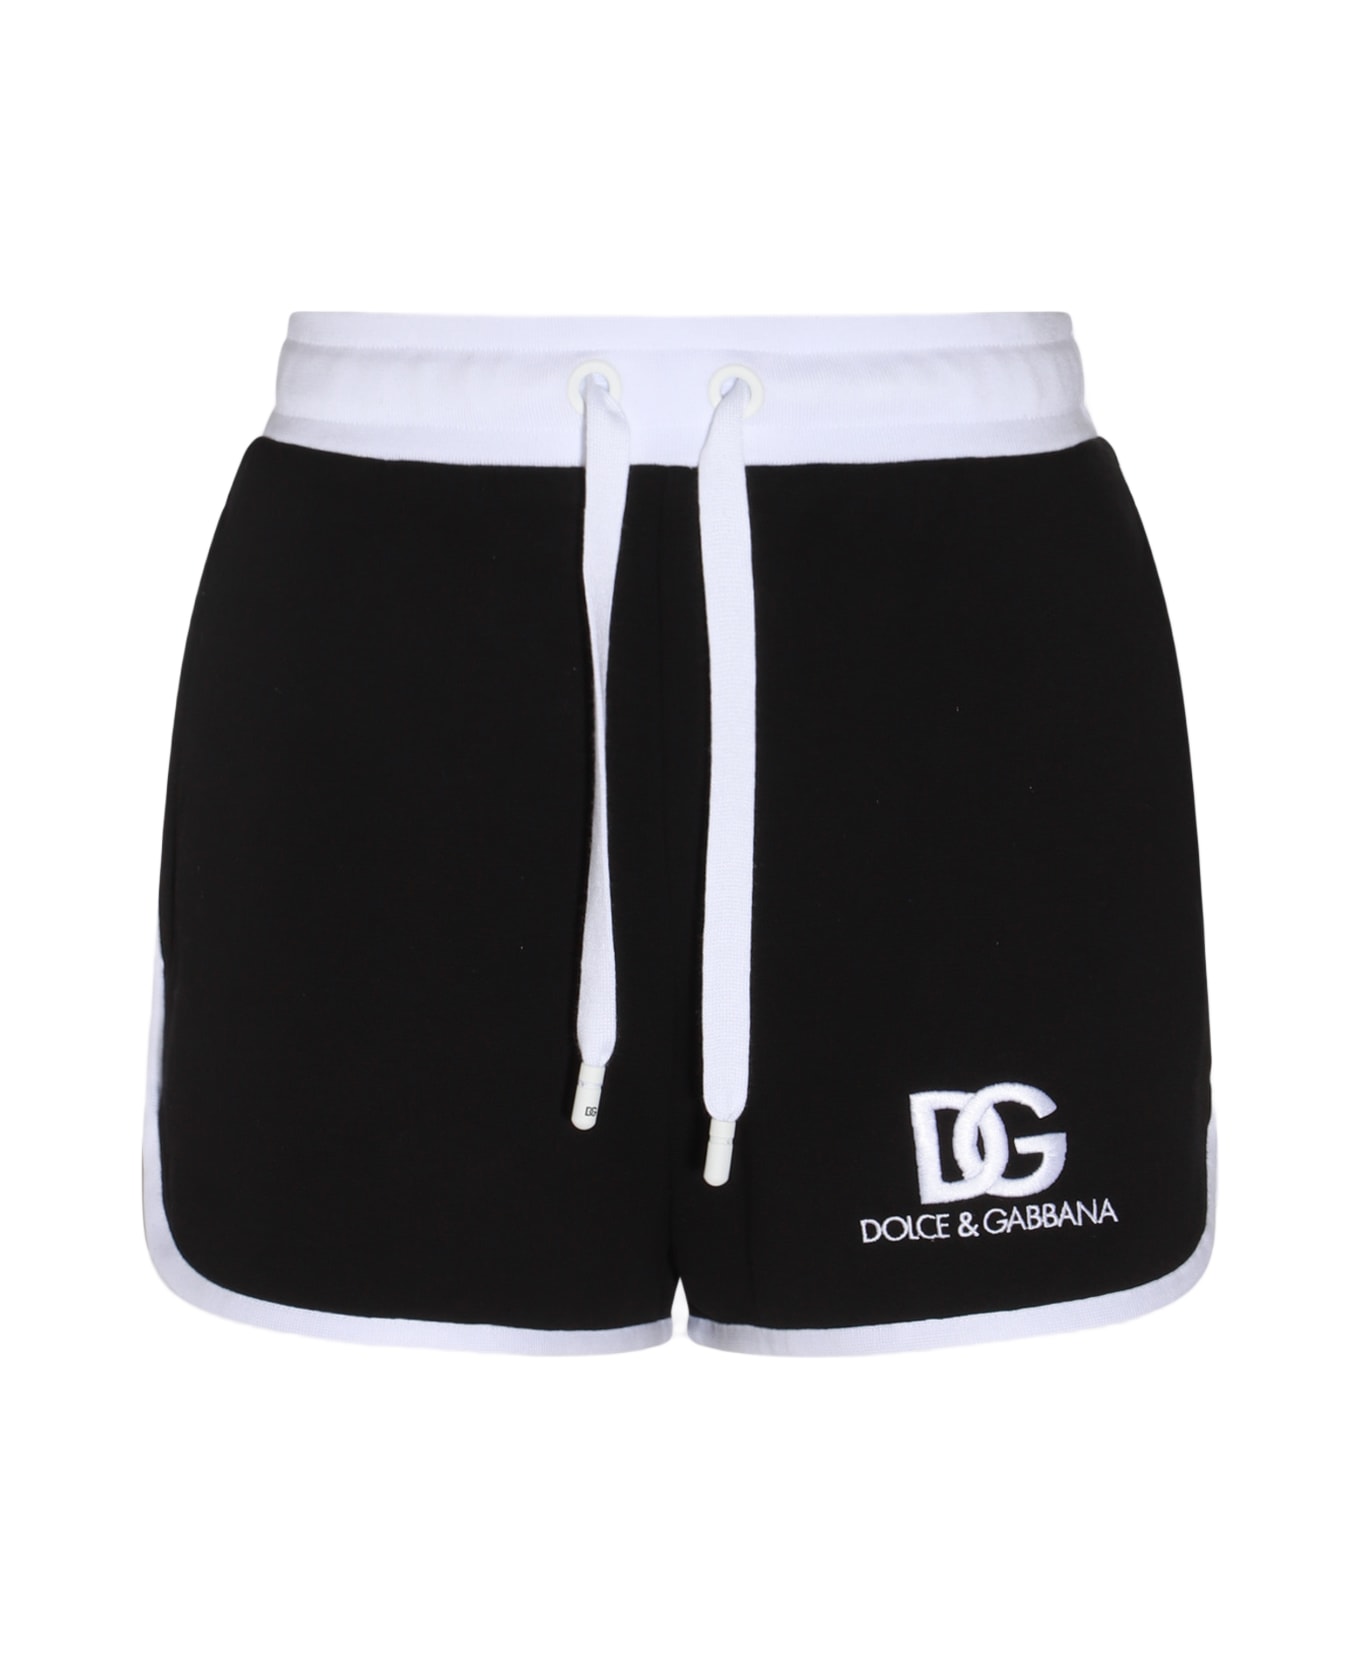 Dolce & Gabbana Black And White Cotton Blend Track Shorts - Nero/bianco